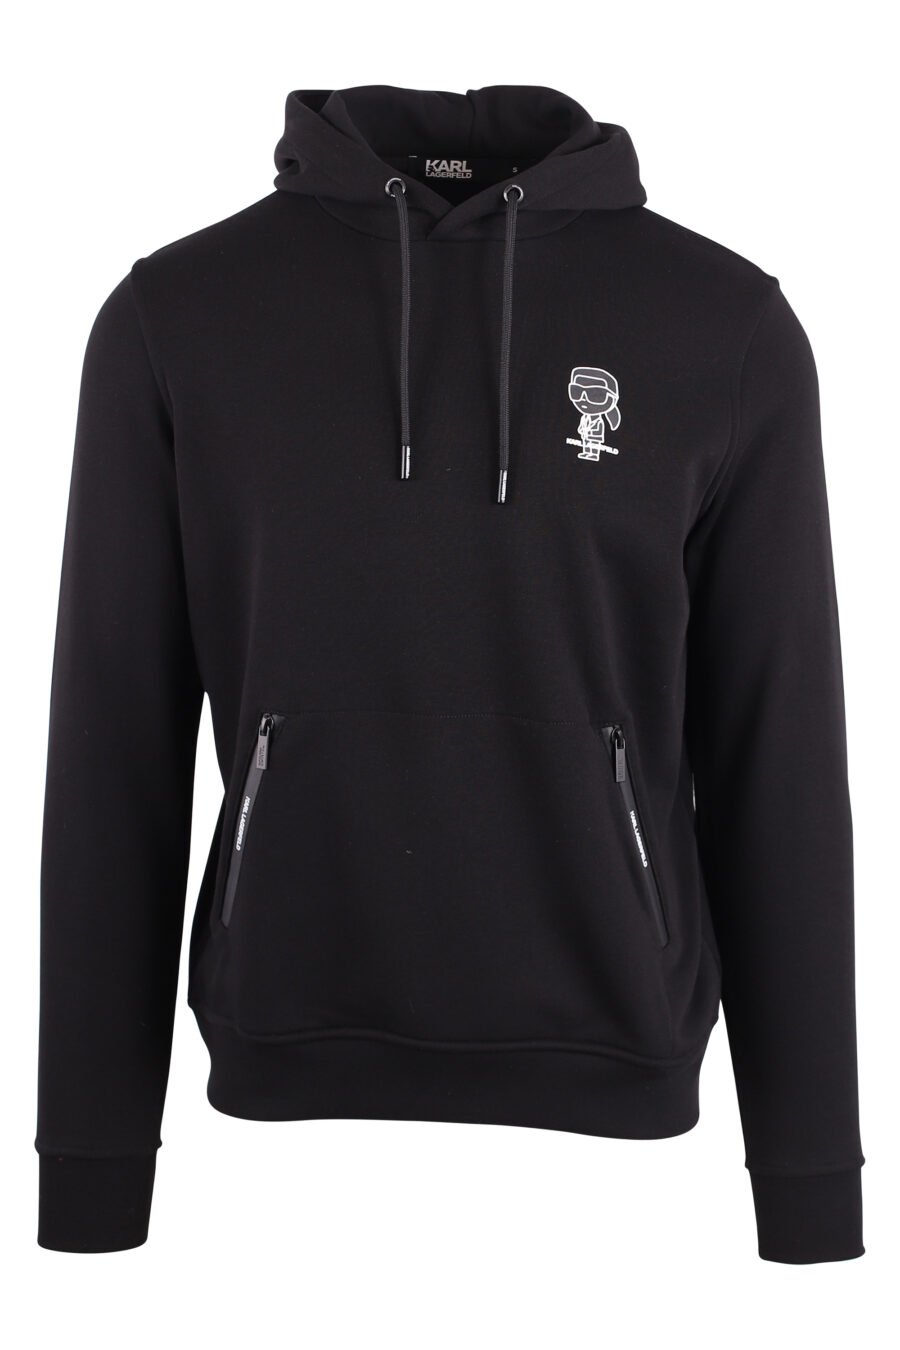 Black sweatshirt with hood and "karl" logo in white silhouette - IMG 9418